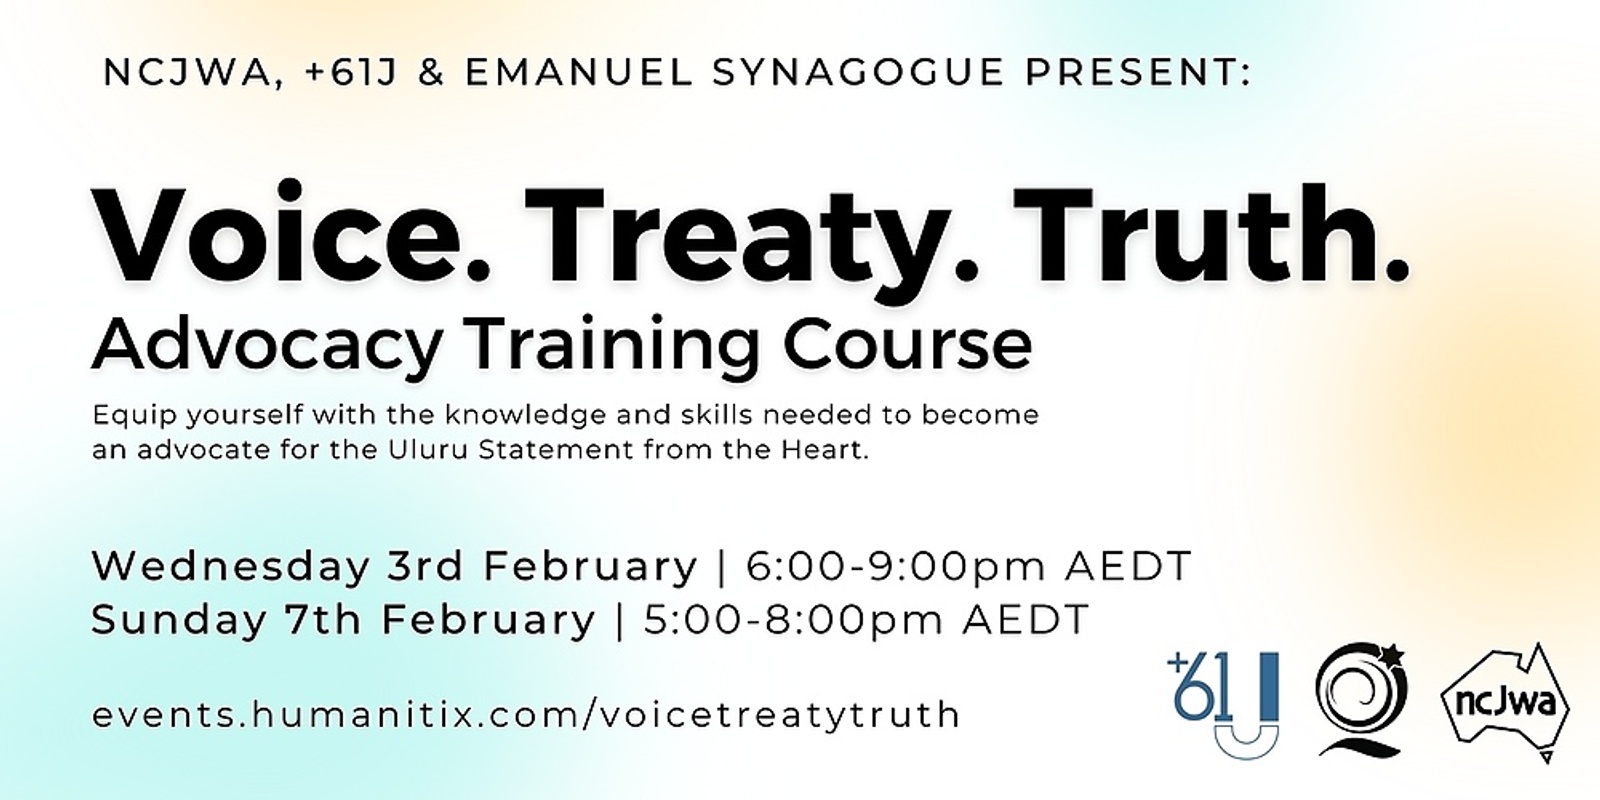 Banner image for Voice. Treaty. Truth. Advocacy Training Program | NCJWA, +61J & Emanuel Synagogue